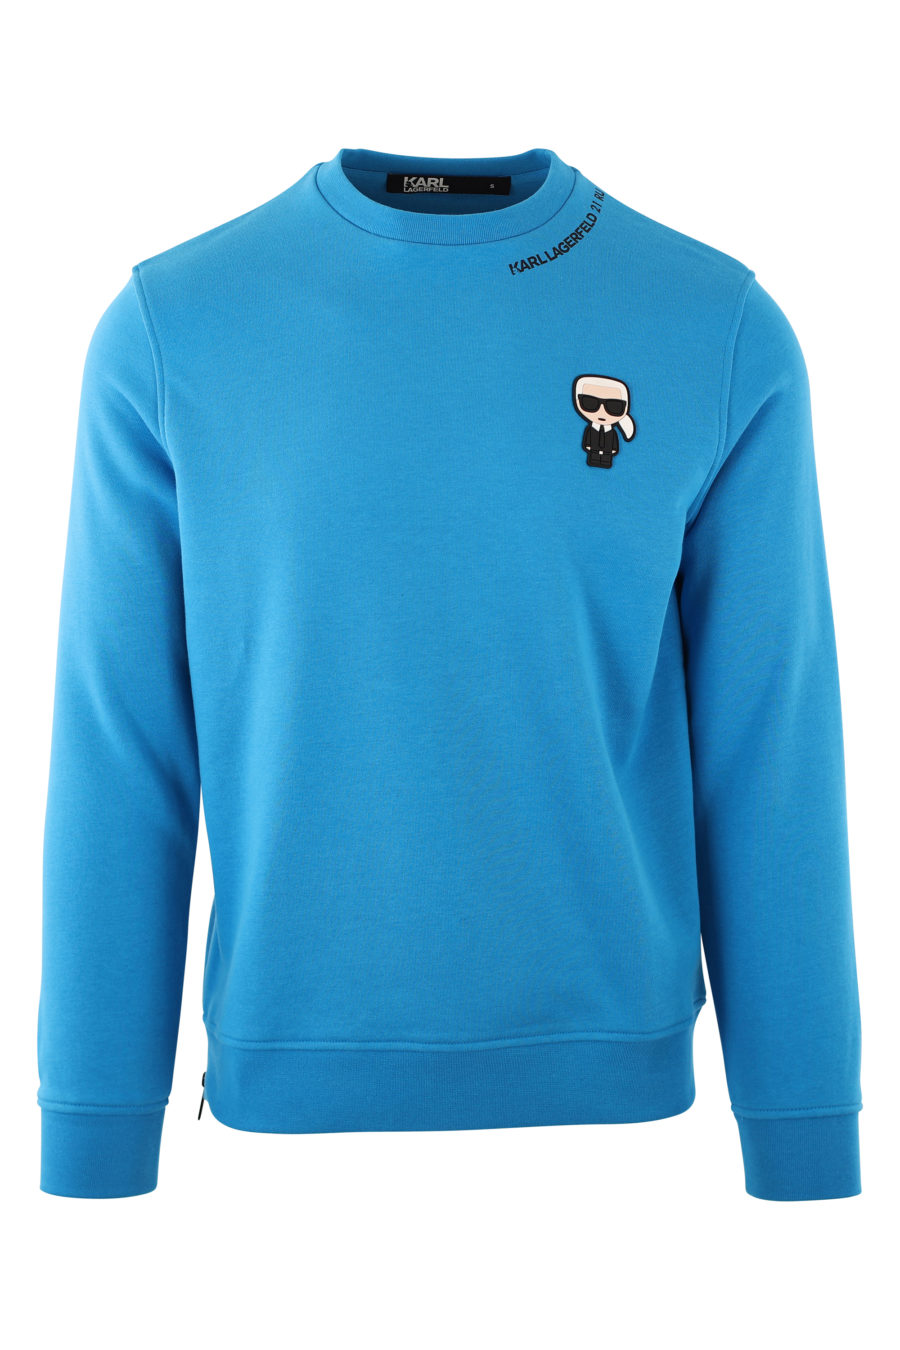 Blue sweatshirt with rubber logo - IMG 2102